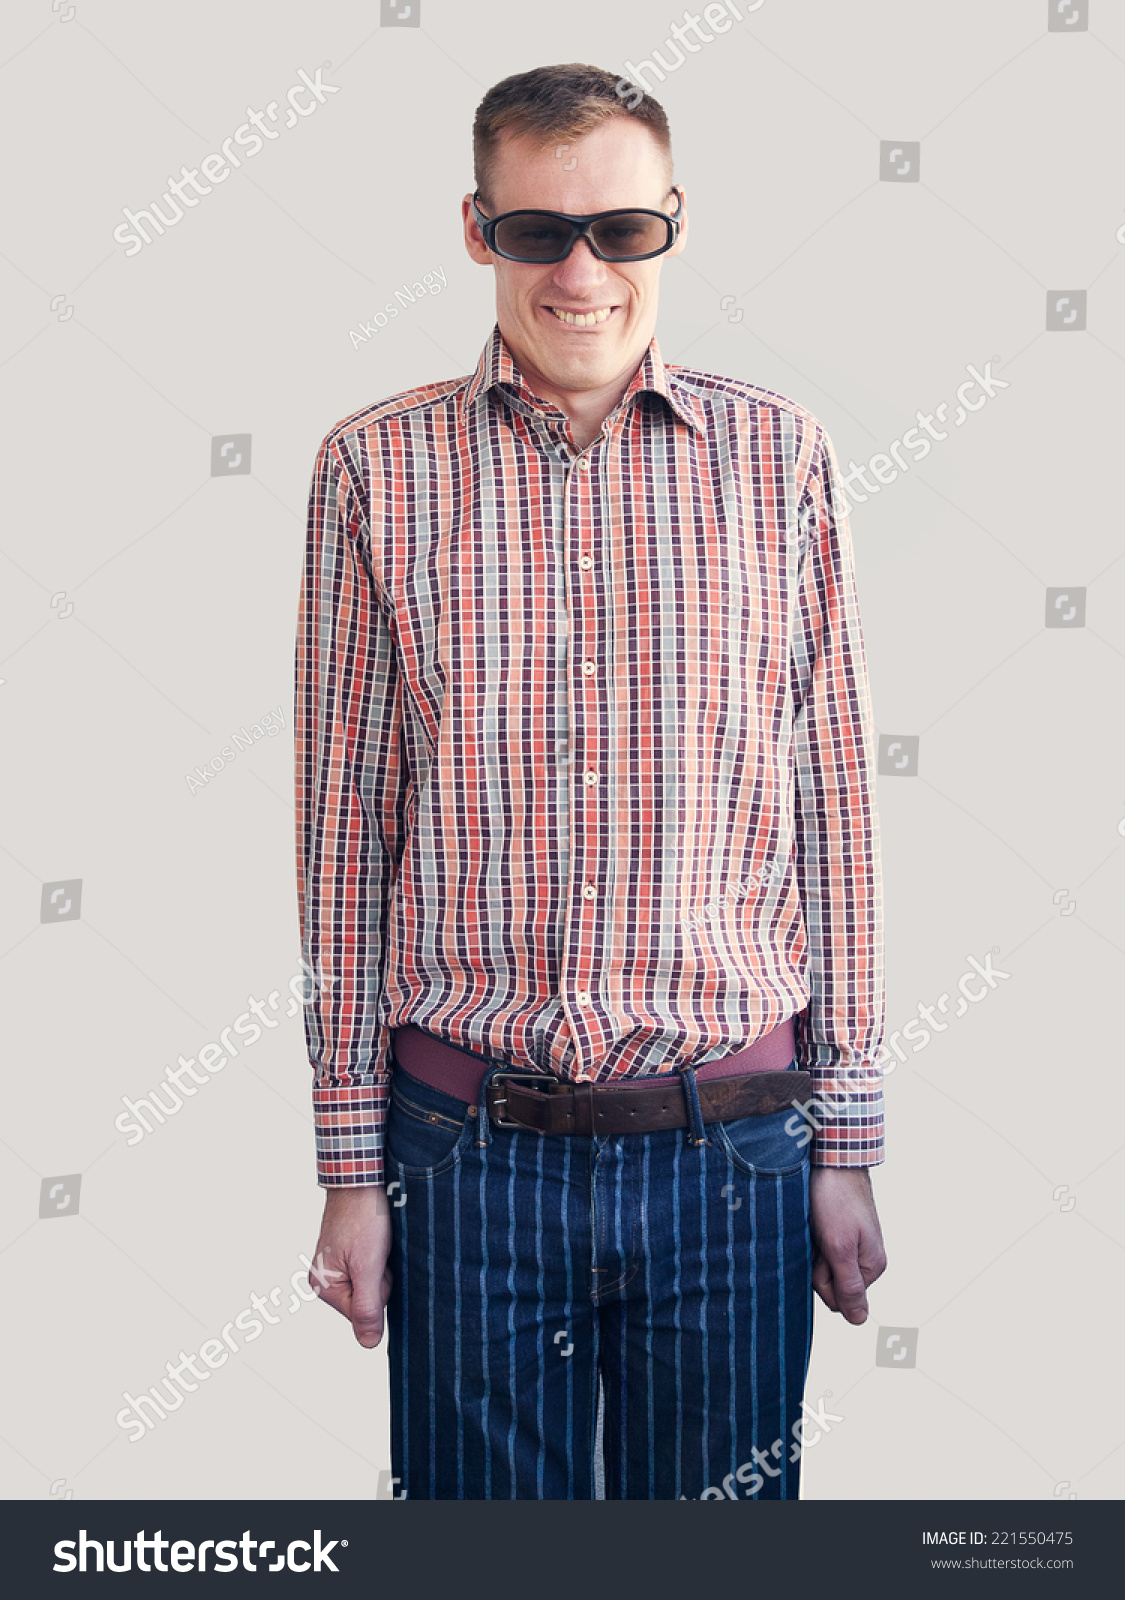 Antistyle Nerd Man Plaid Shirt Striped Stock Photo 221550475 ...